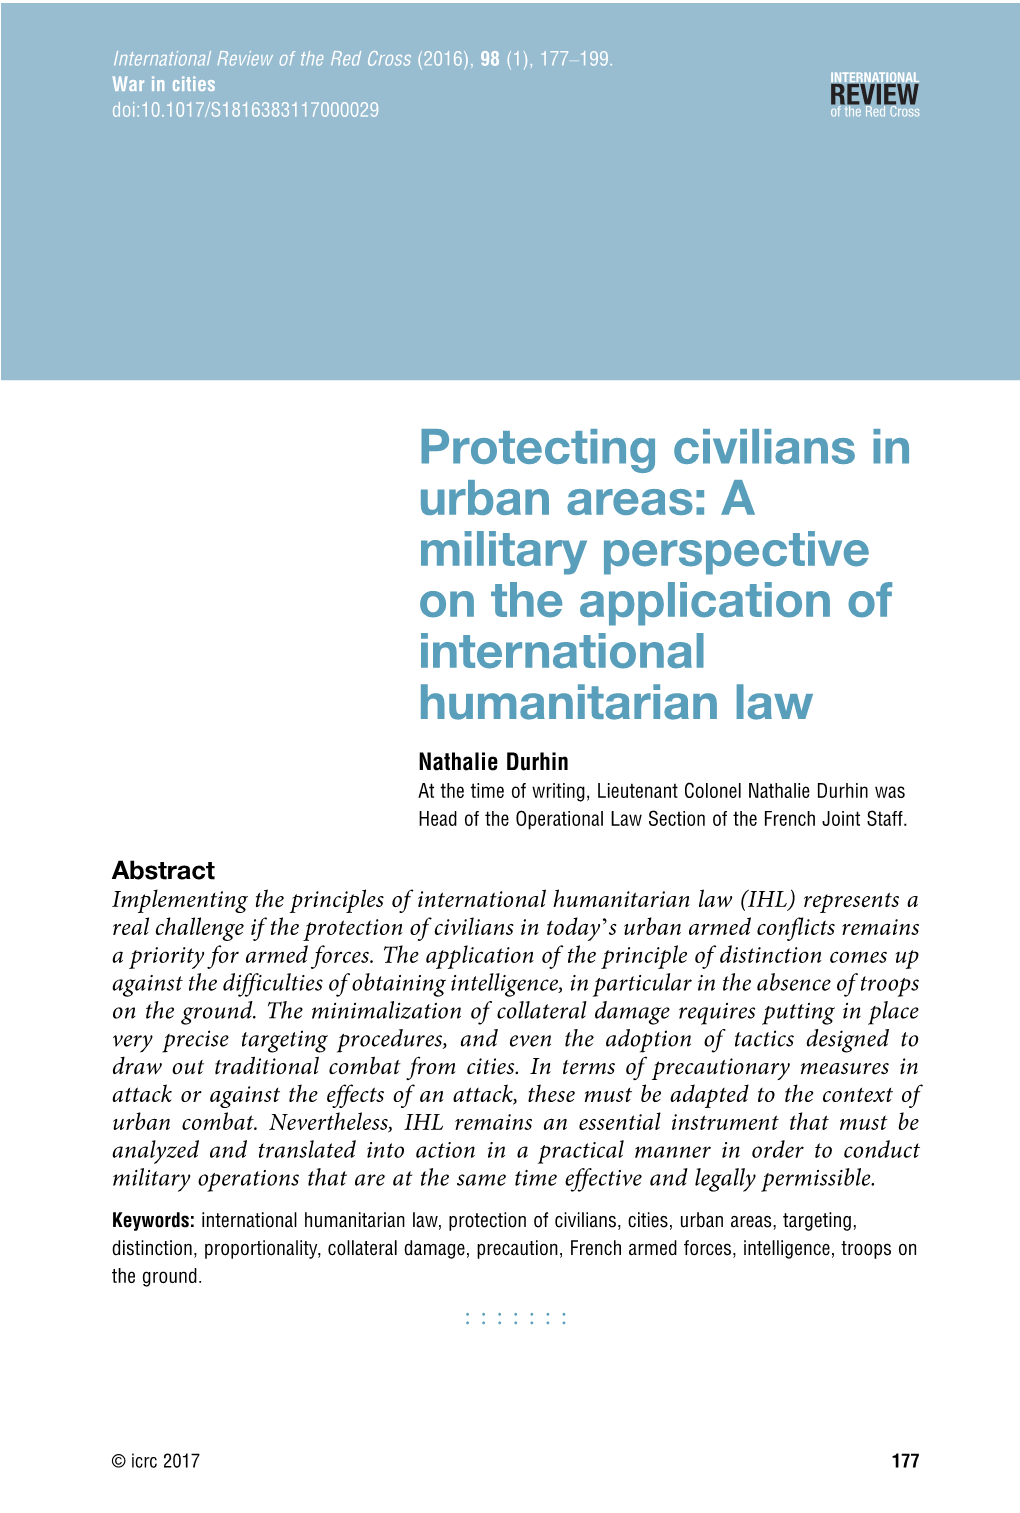 Protecting Civilians in Urban Areas